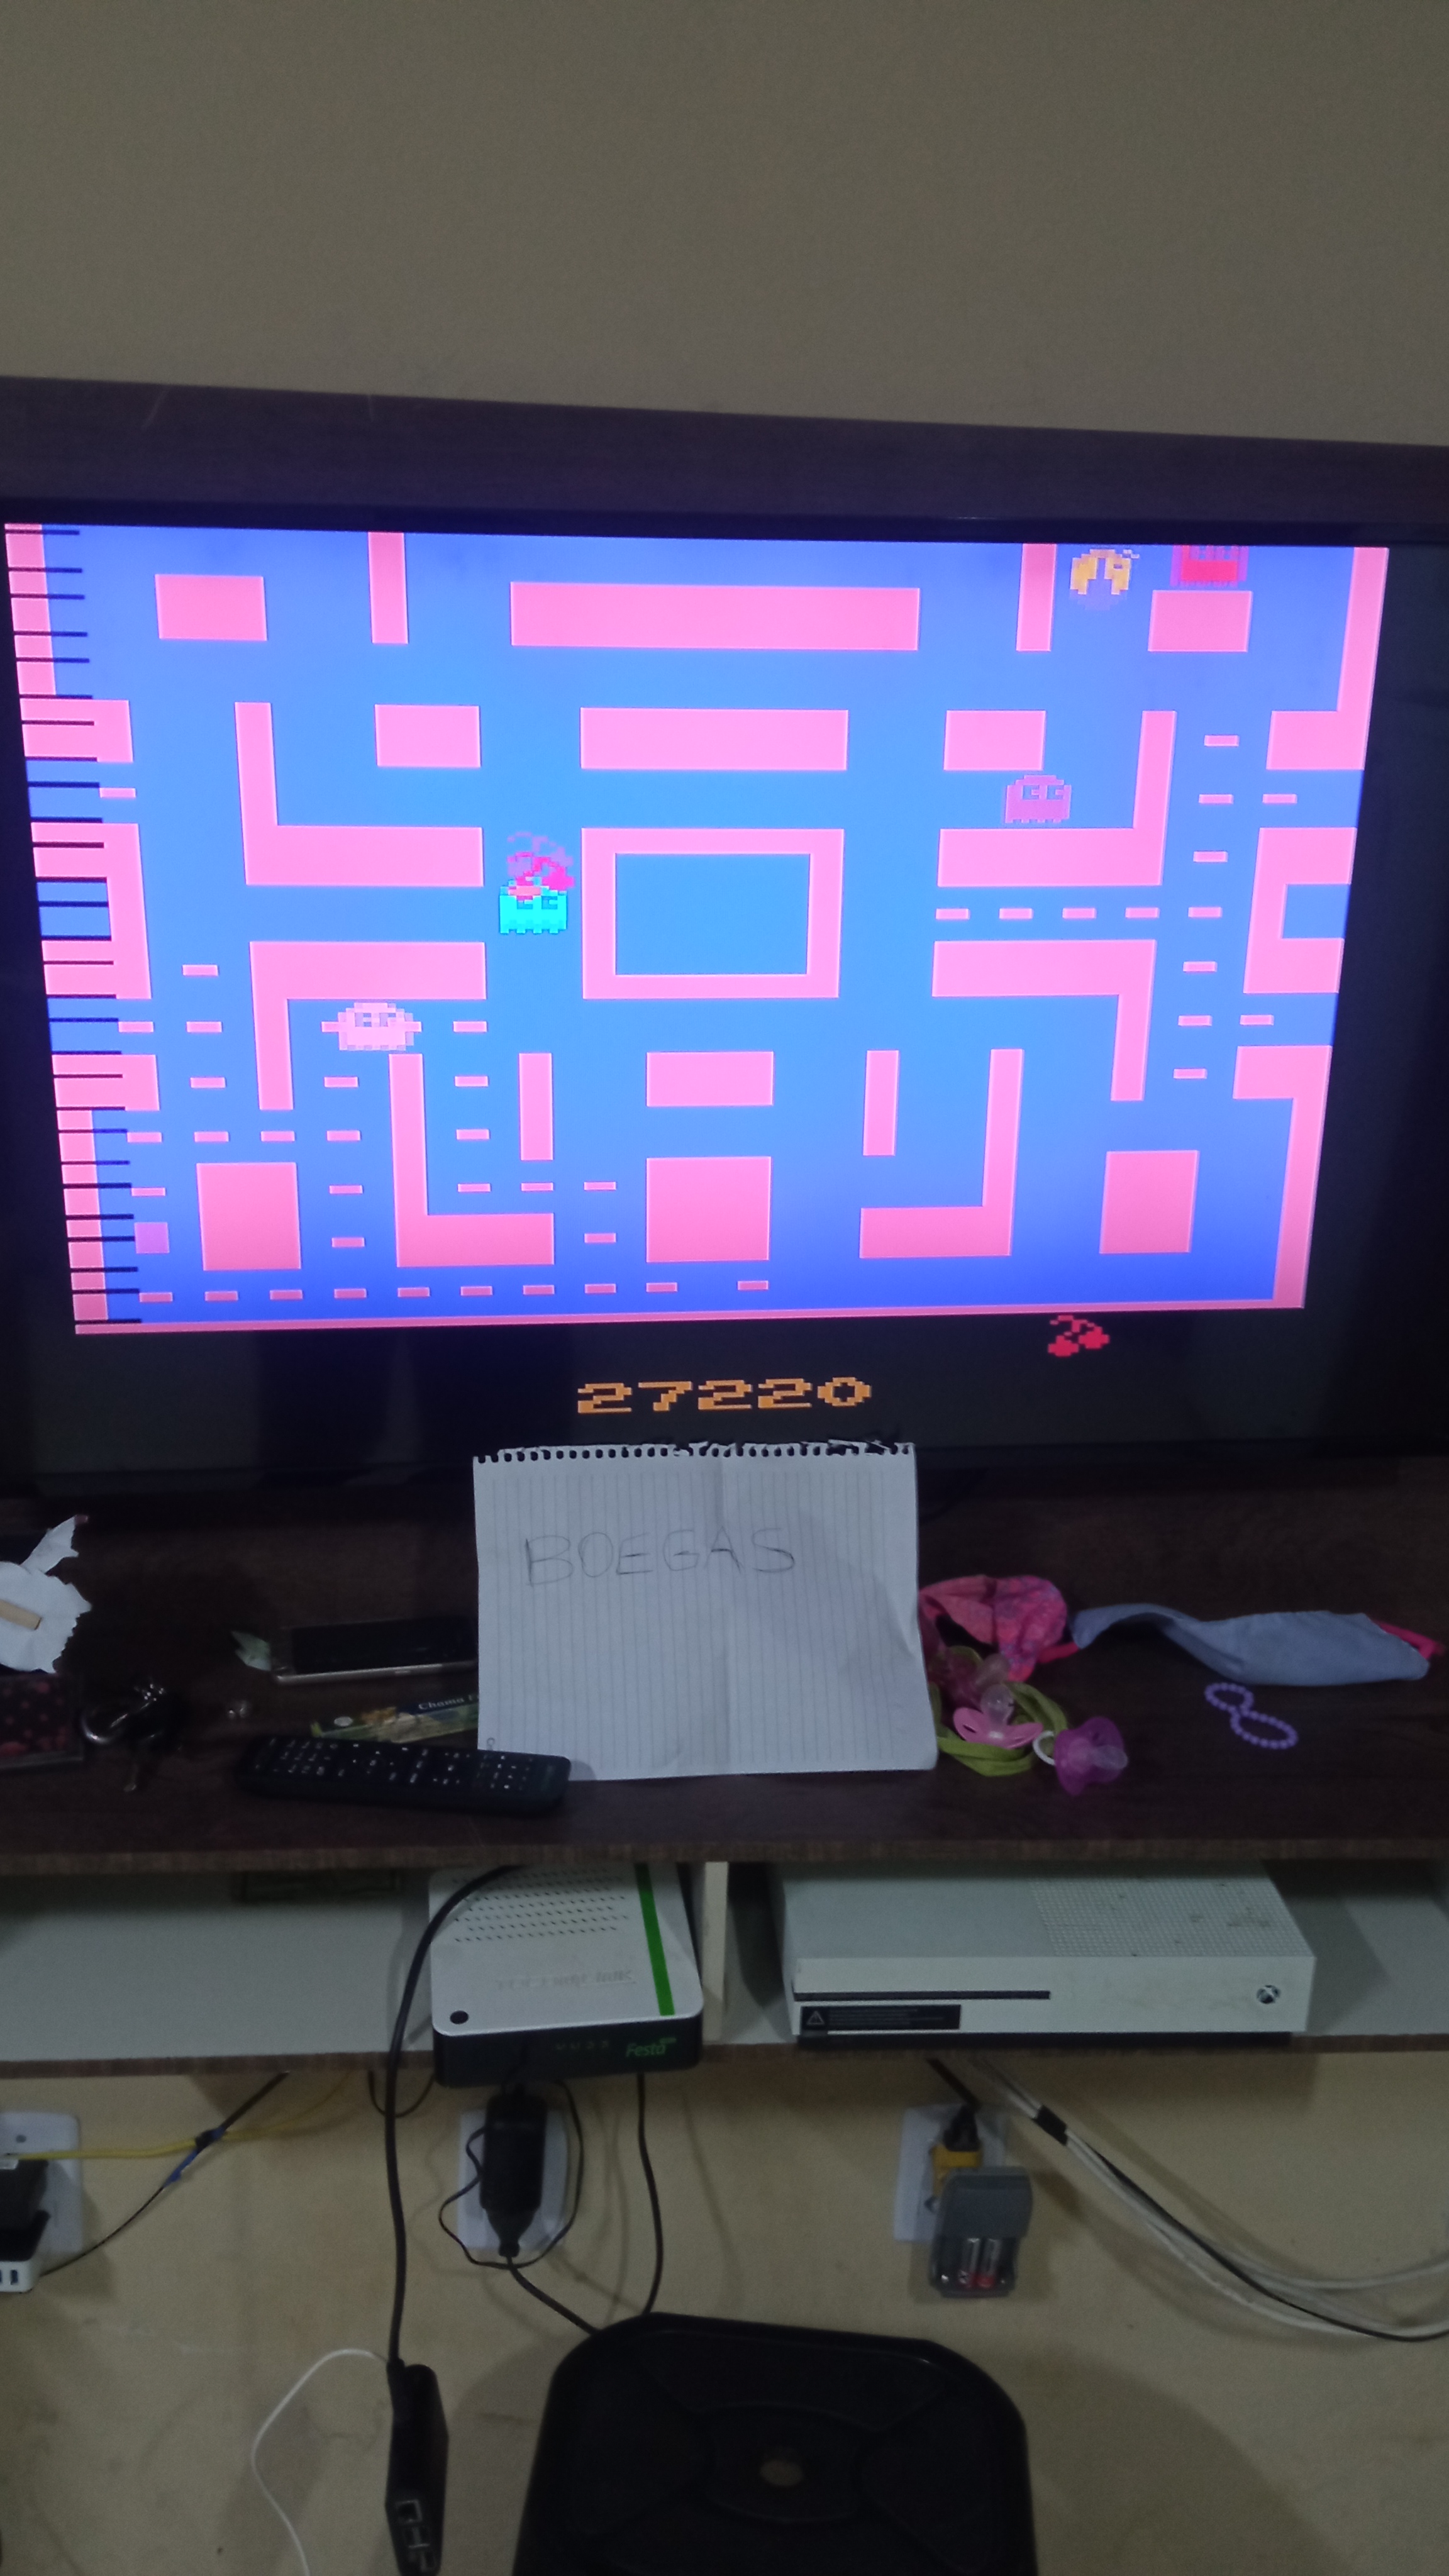 Boegas: Ms. Pac-Man [Strawberry Start] (Atari 2600 Emulated Novice/B Mode) 27,220 points on 2021-11-25 14:21:56